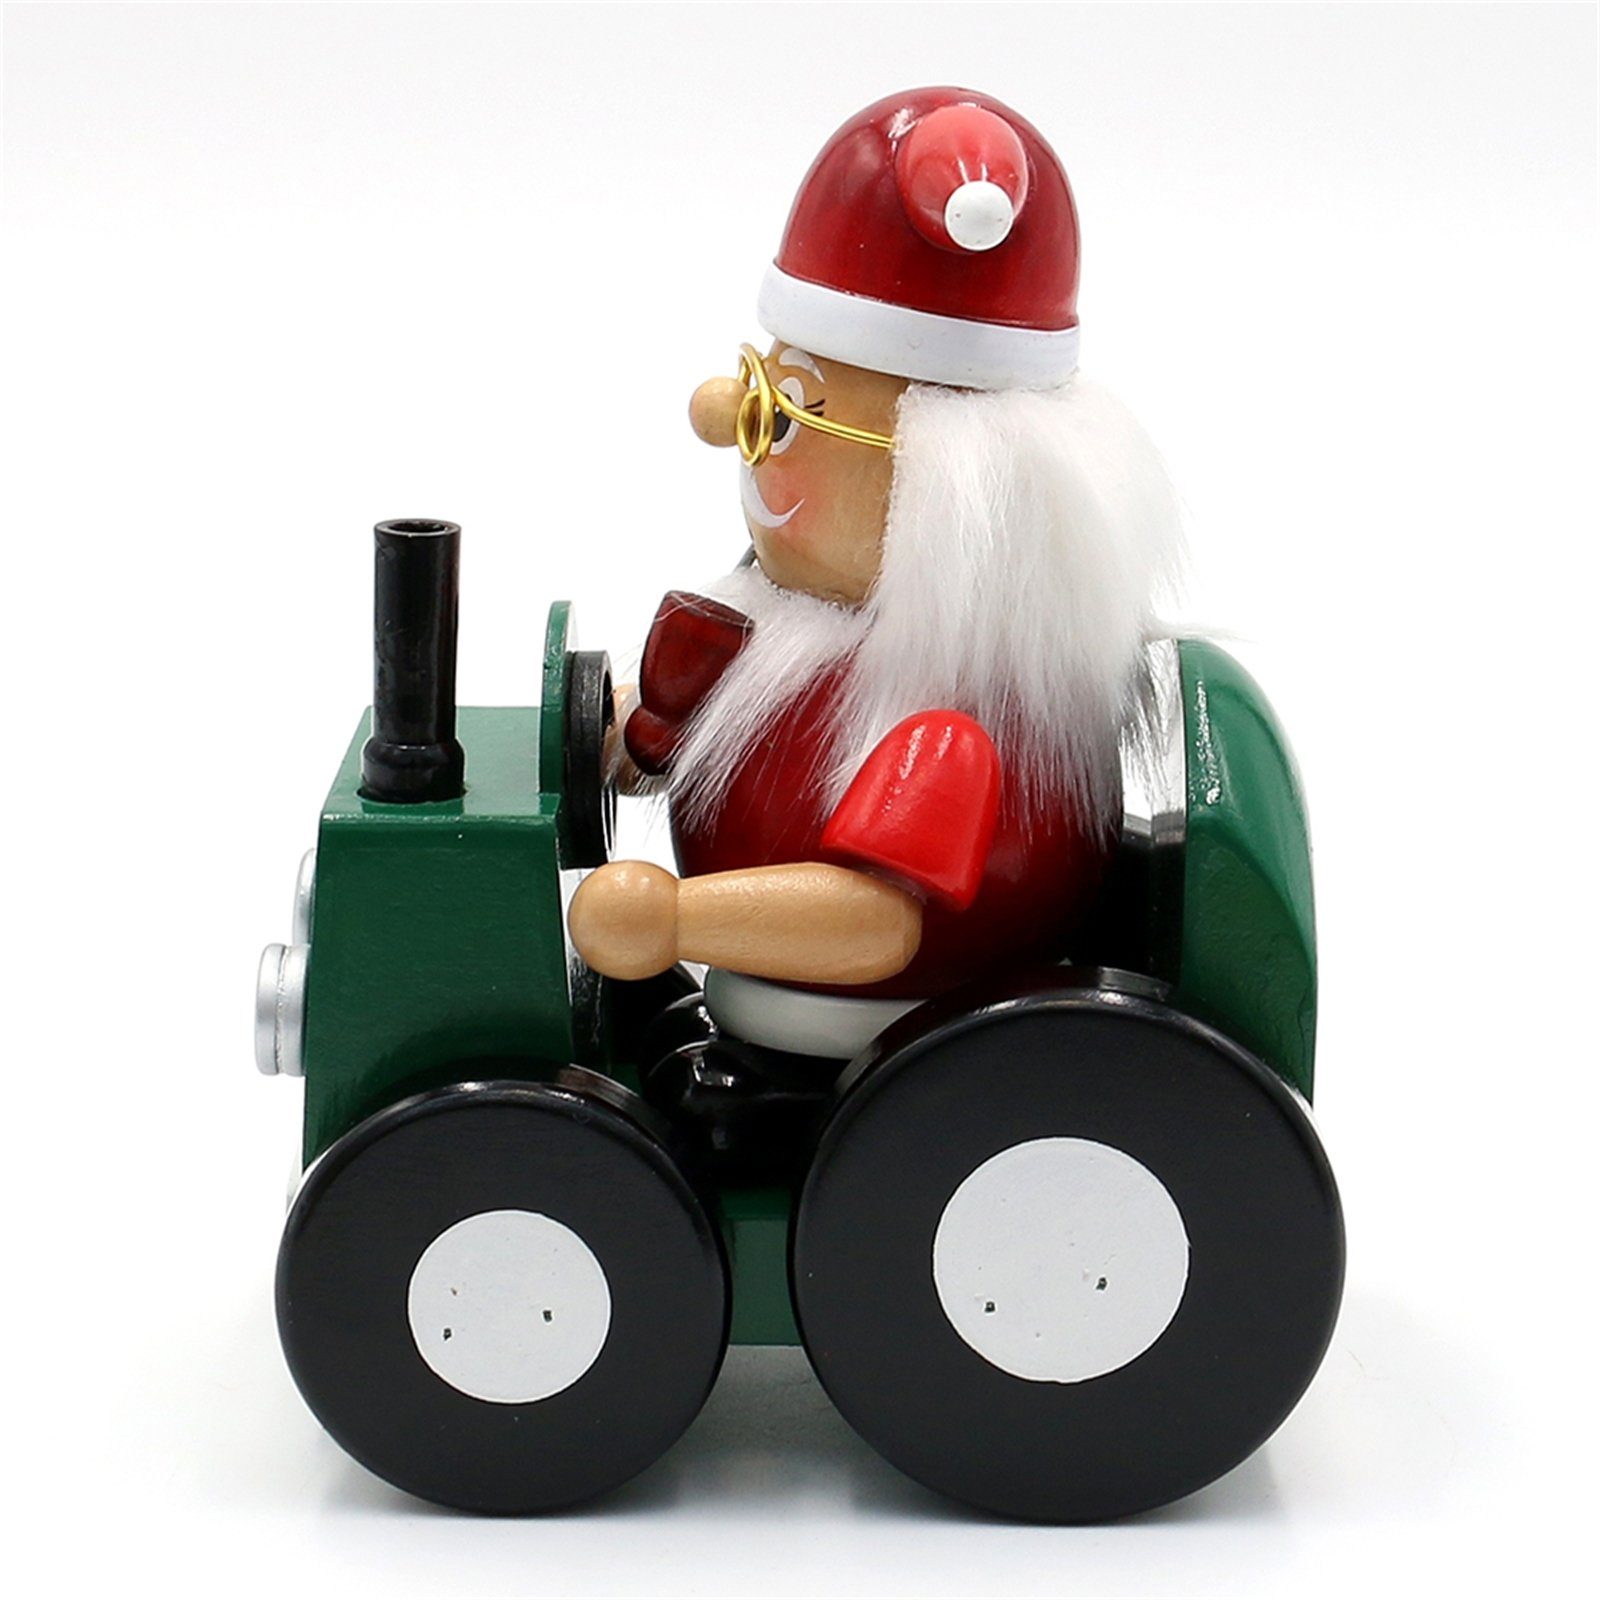 SIGRO Räuchermännchen Holz St) Santa, (1 Traktor Räucherfigur mit